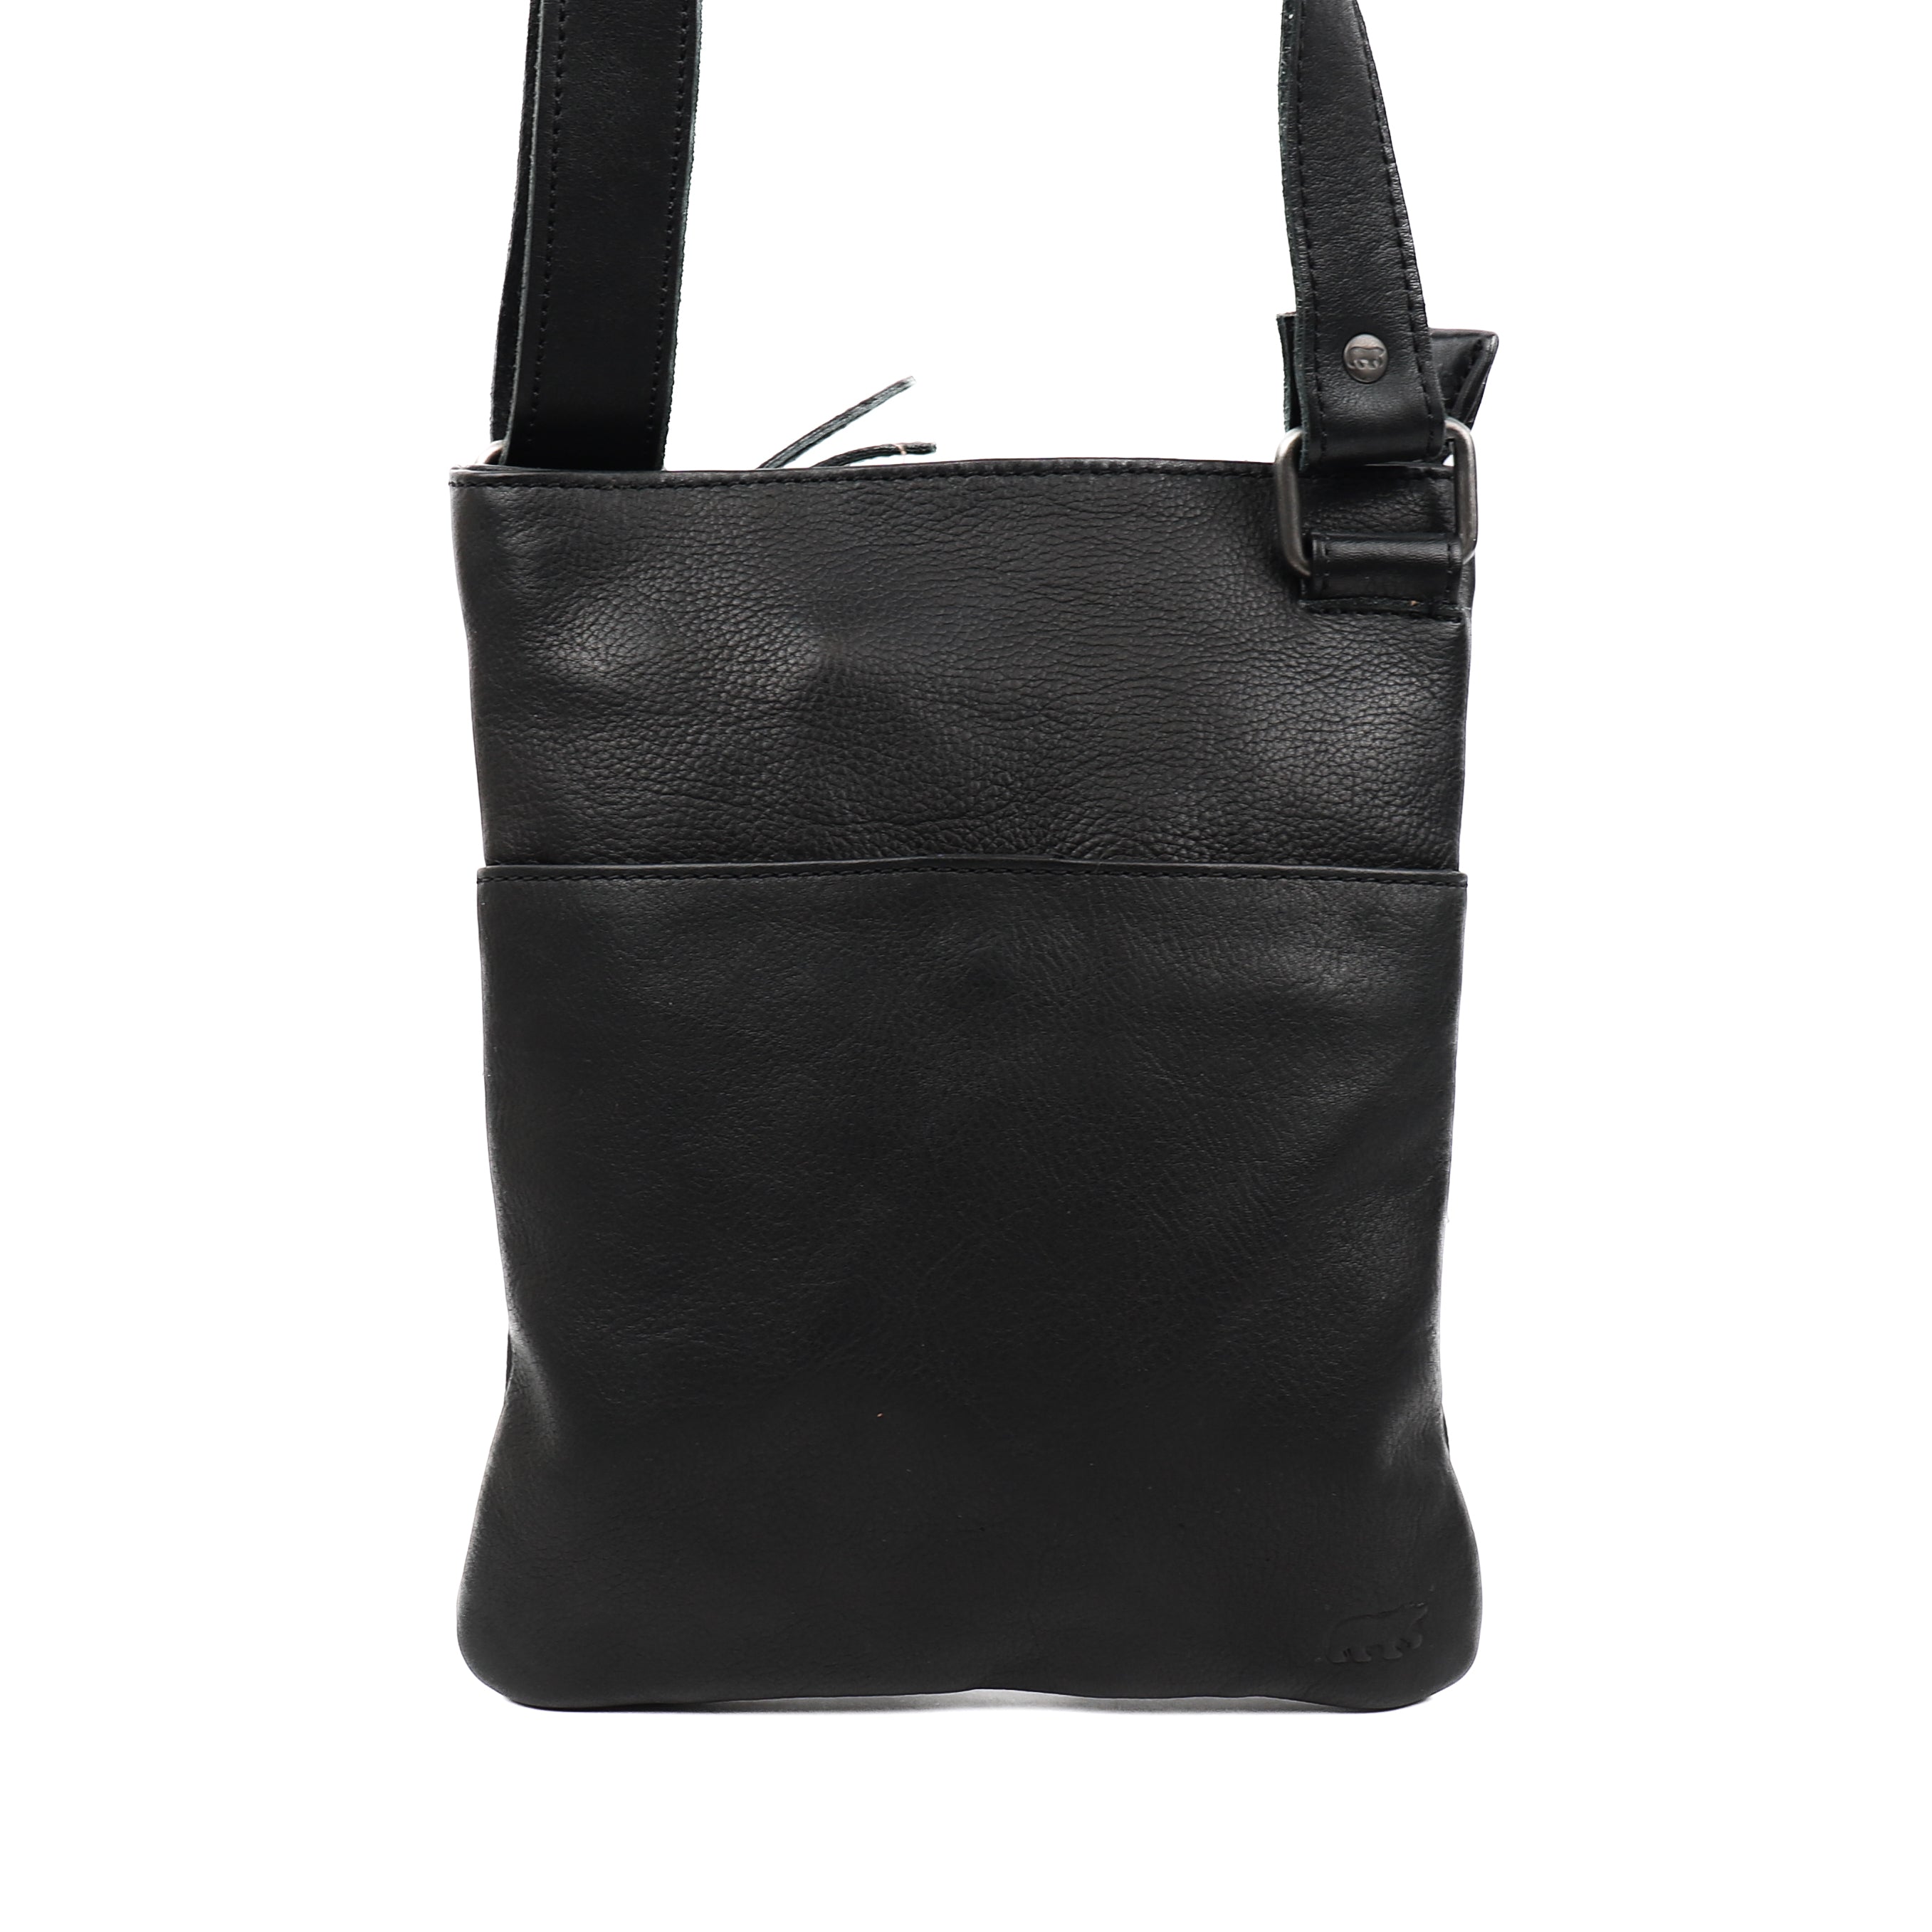 Shoulder bag 'Doris' black